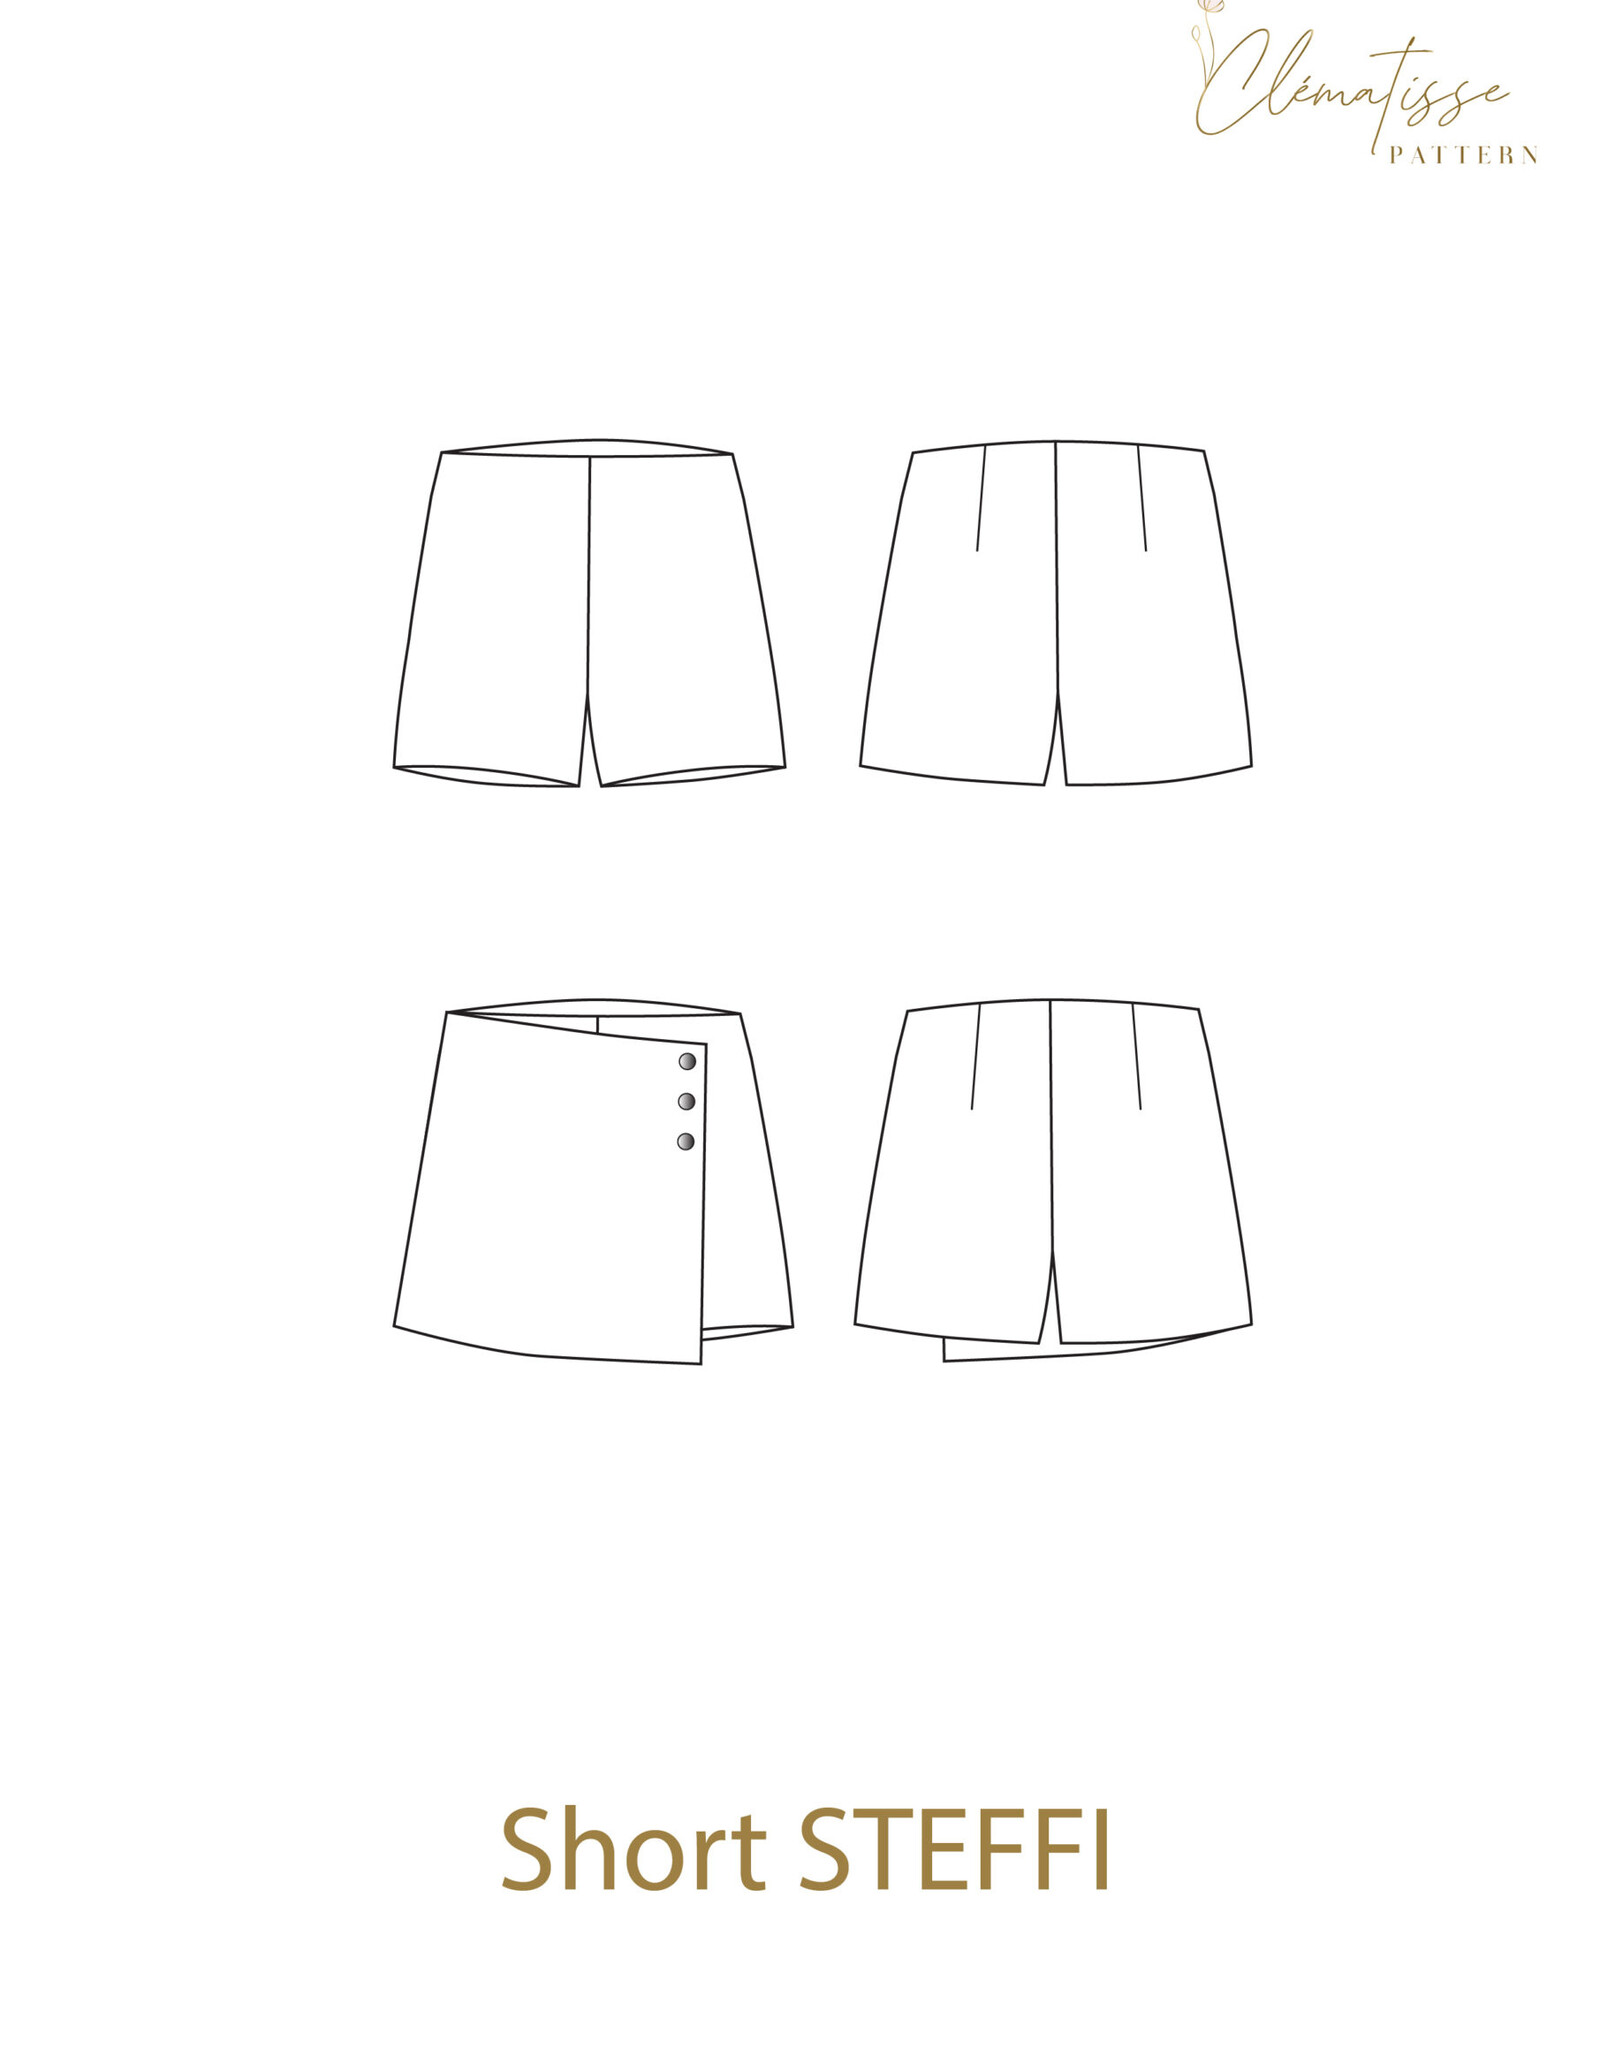 Clématisse Pattern Short-rok Steffi